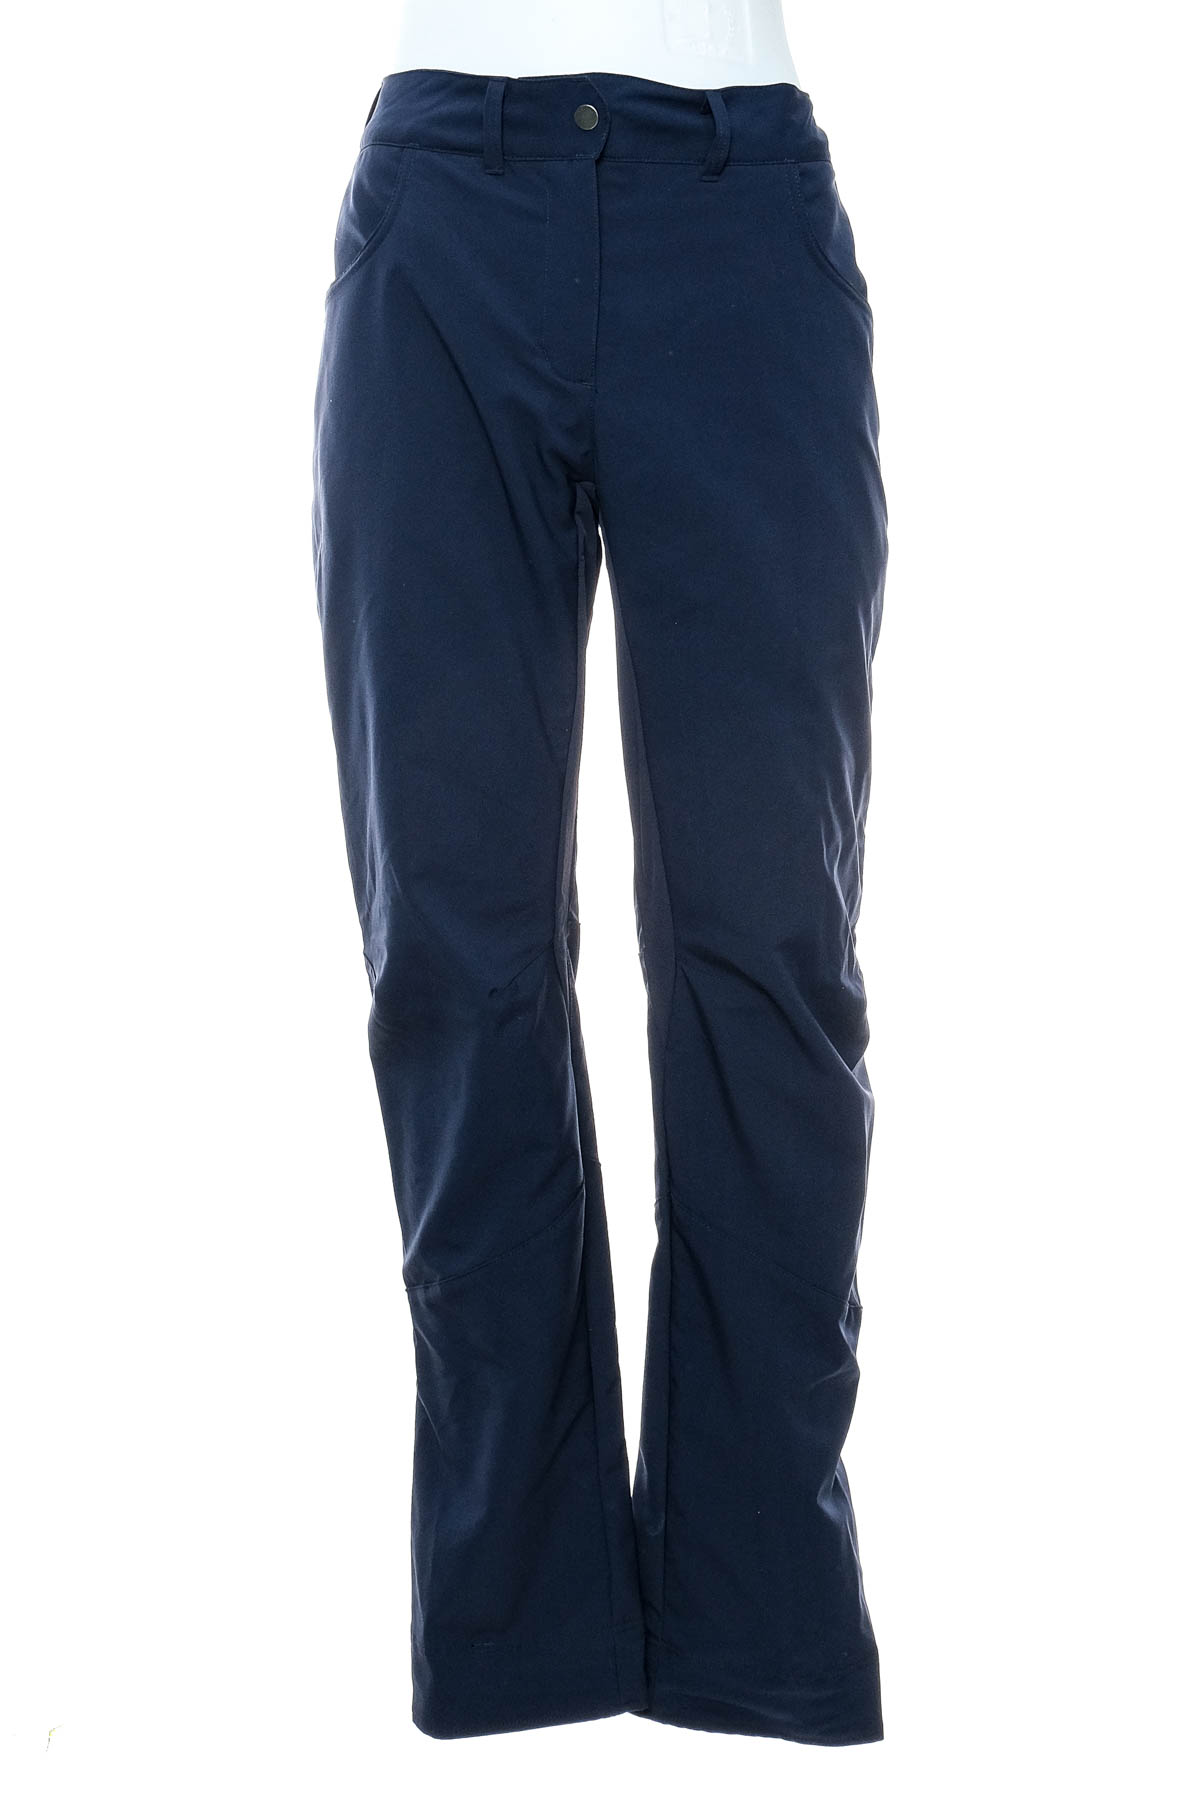 Pantalon pentru bărbați - DECATHLON - 0